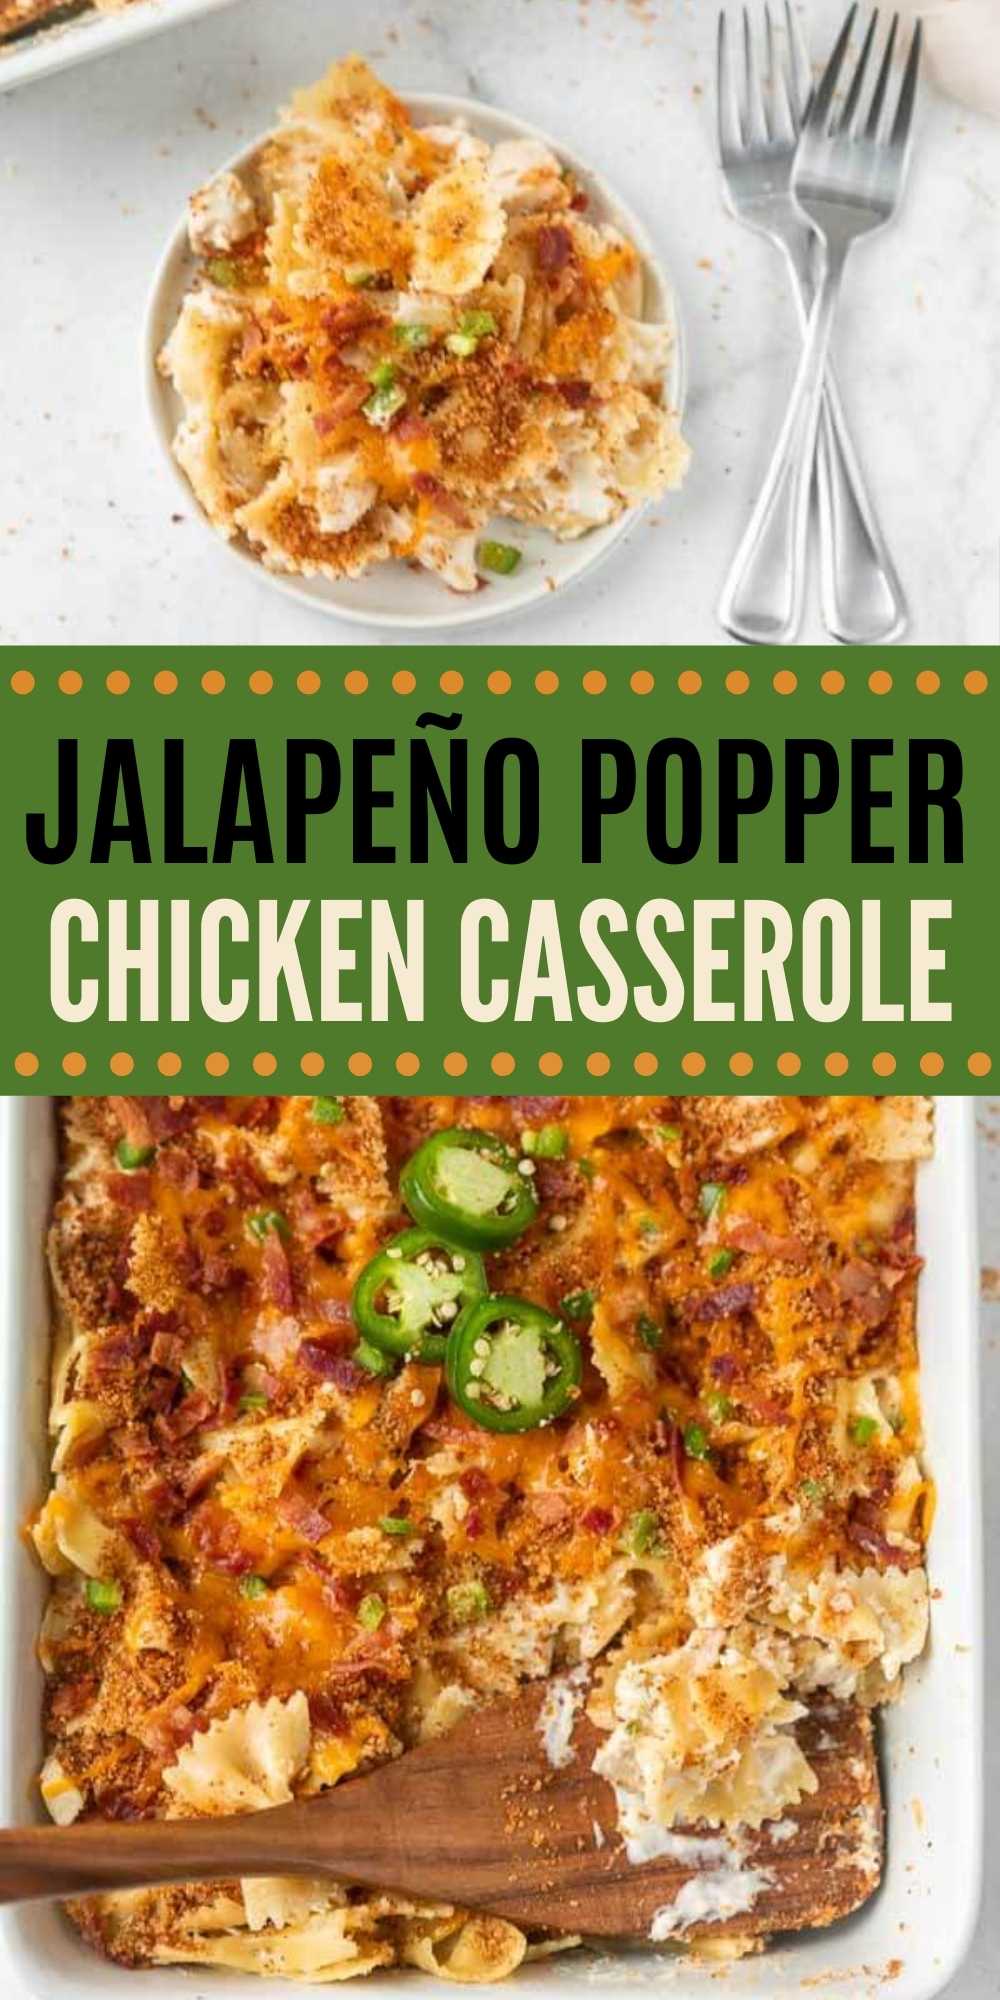 Jalapeno popper chicken casserole recipe - ready in minutes